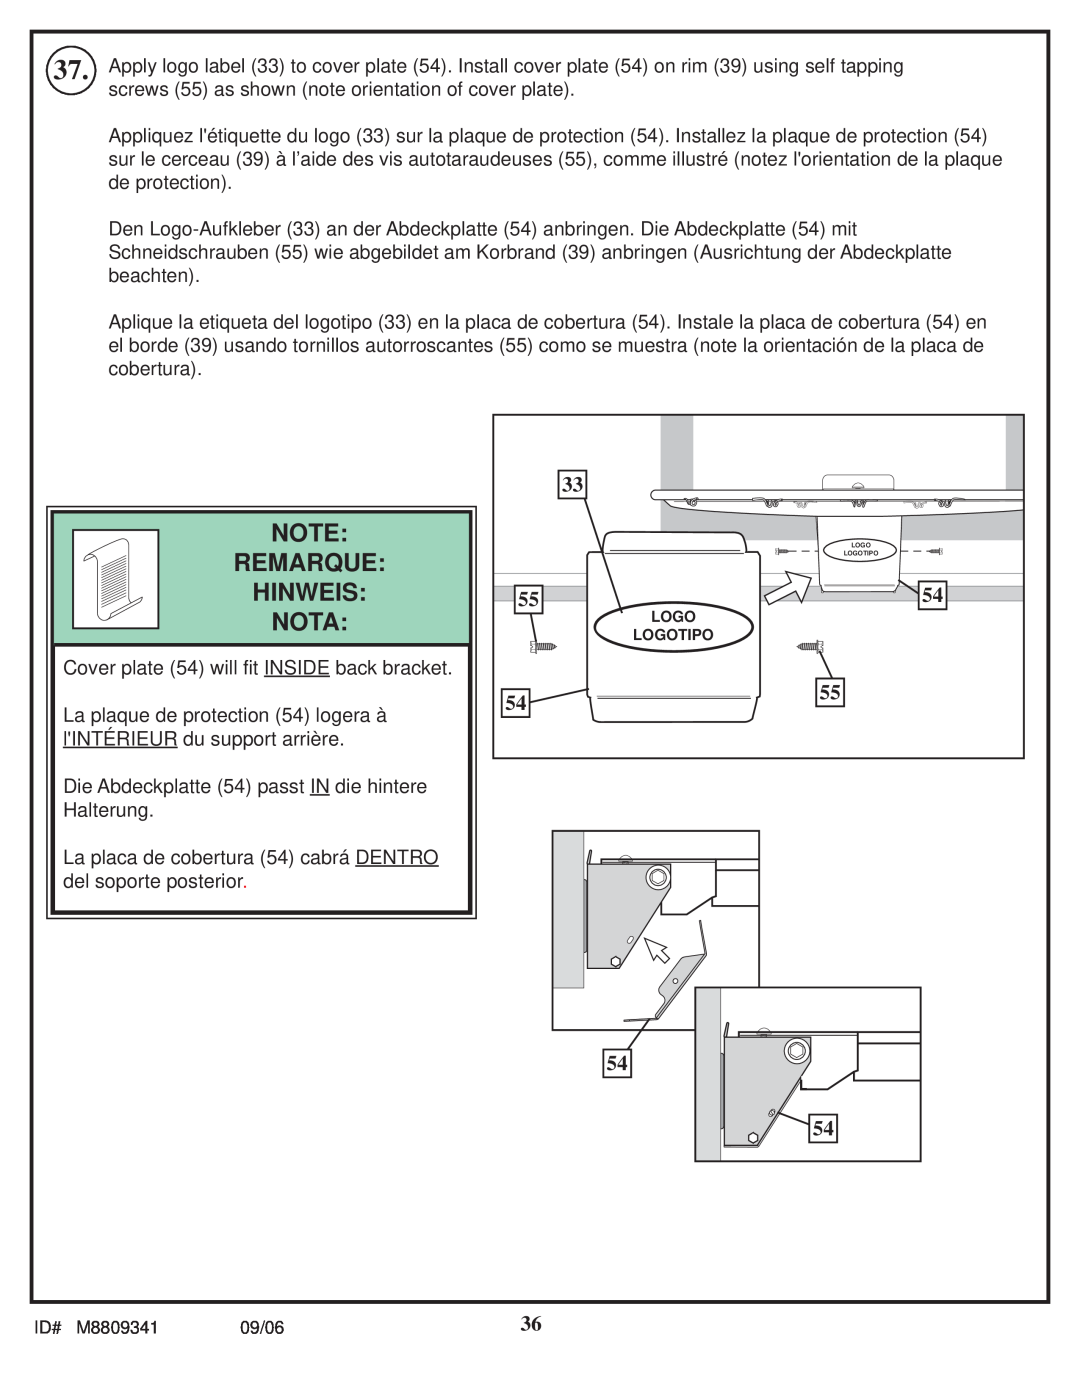 Spalding M8809341 manual Hinweis, Remarque, Nota 